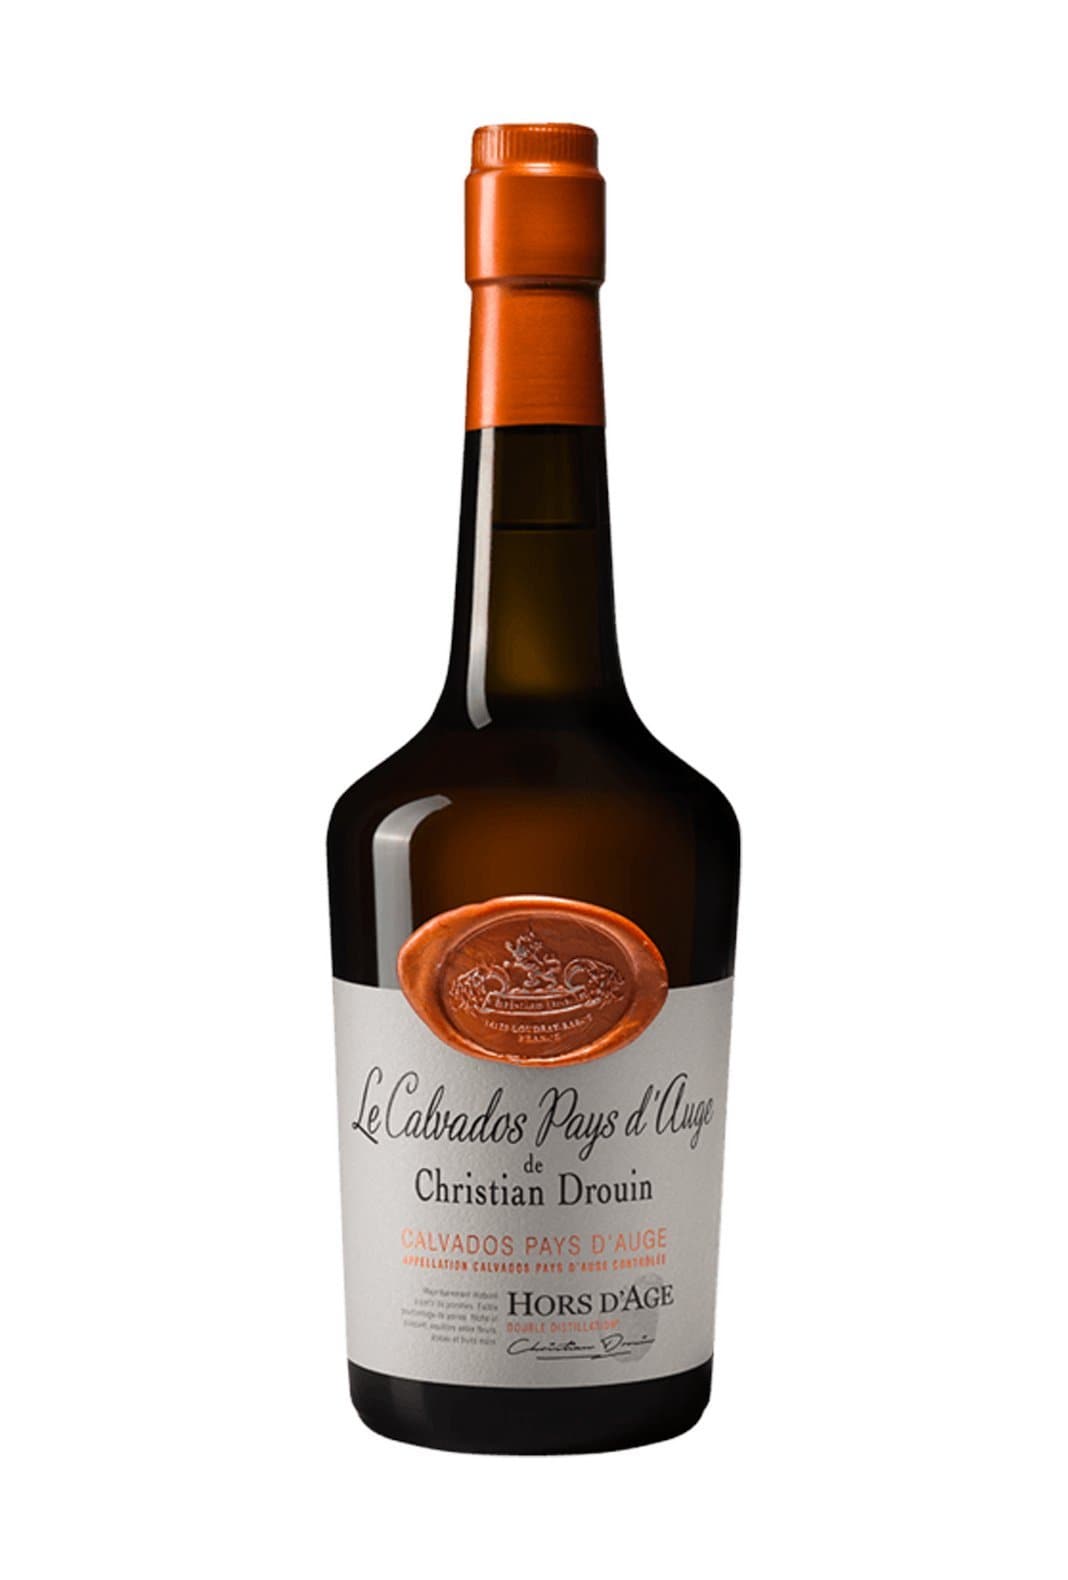 Christian Drouin Hors D'Age Calvados Pays d'Auge 42% 700ml | Brandy | Shop online at Spirits of France